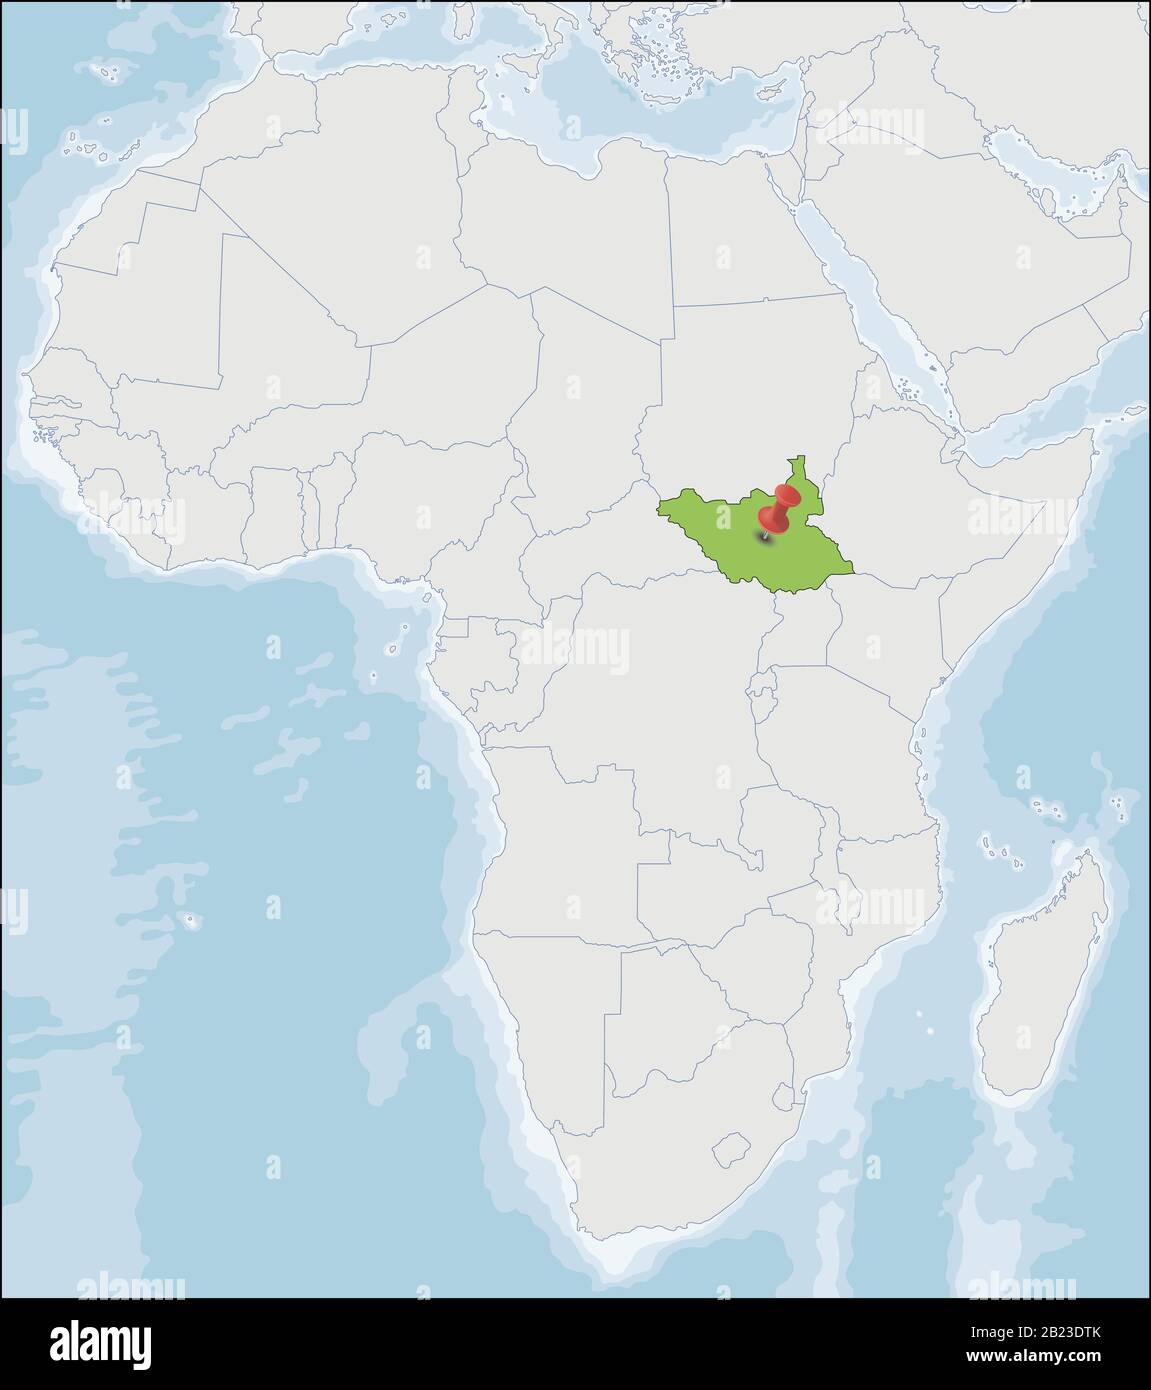 Lage der Republik Südsudan auf Afrika-Karte Stock Vektor